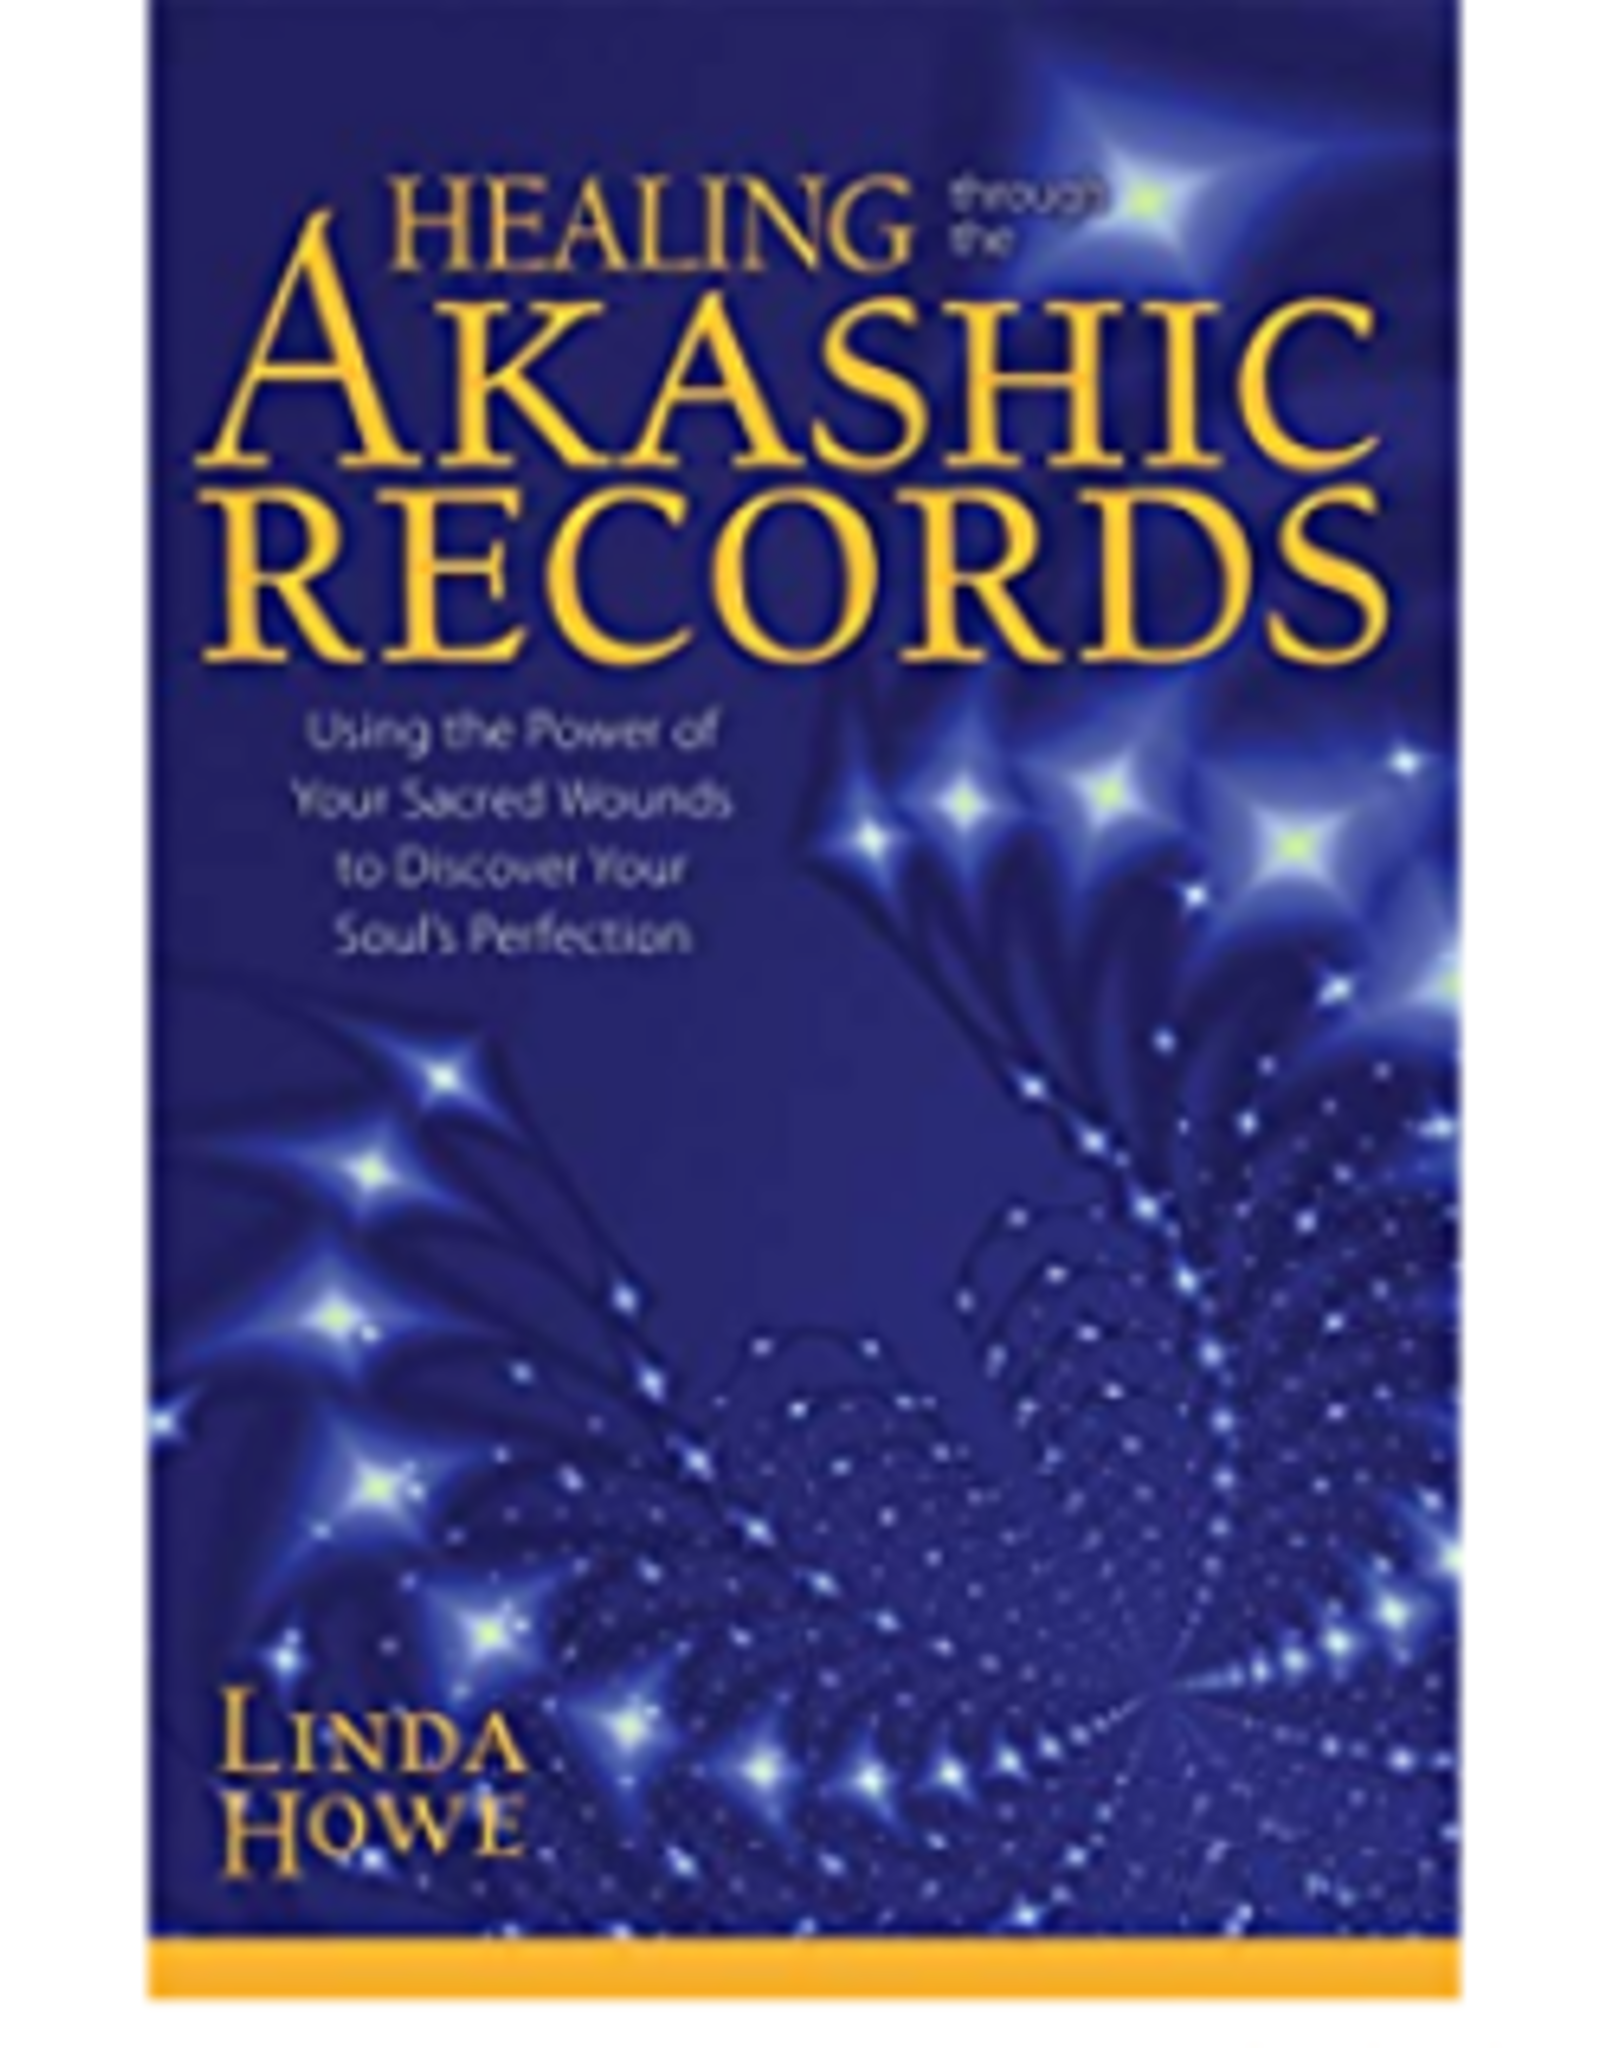 Linda Howe Healing Through the Akashic Records by Linda Howe